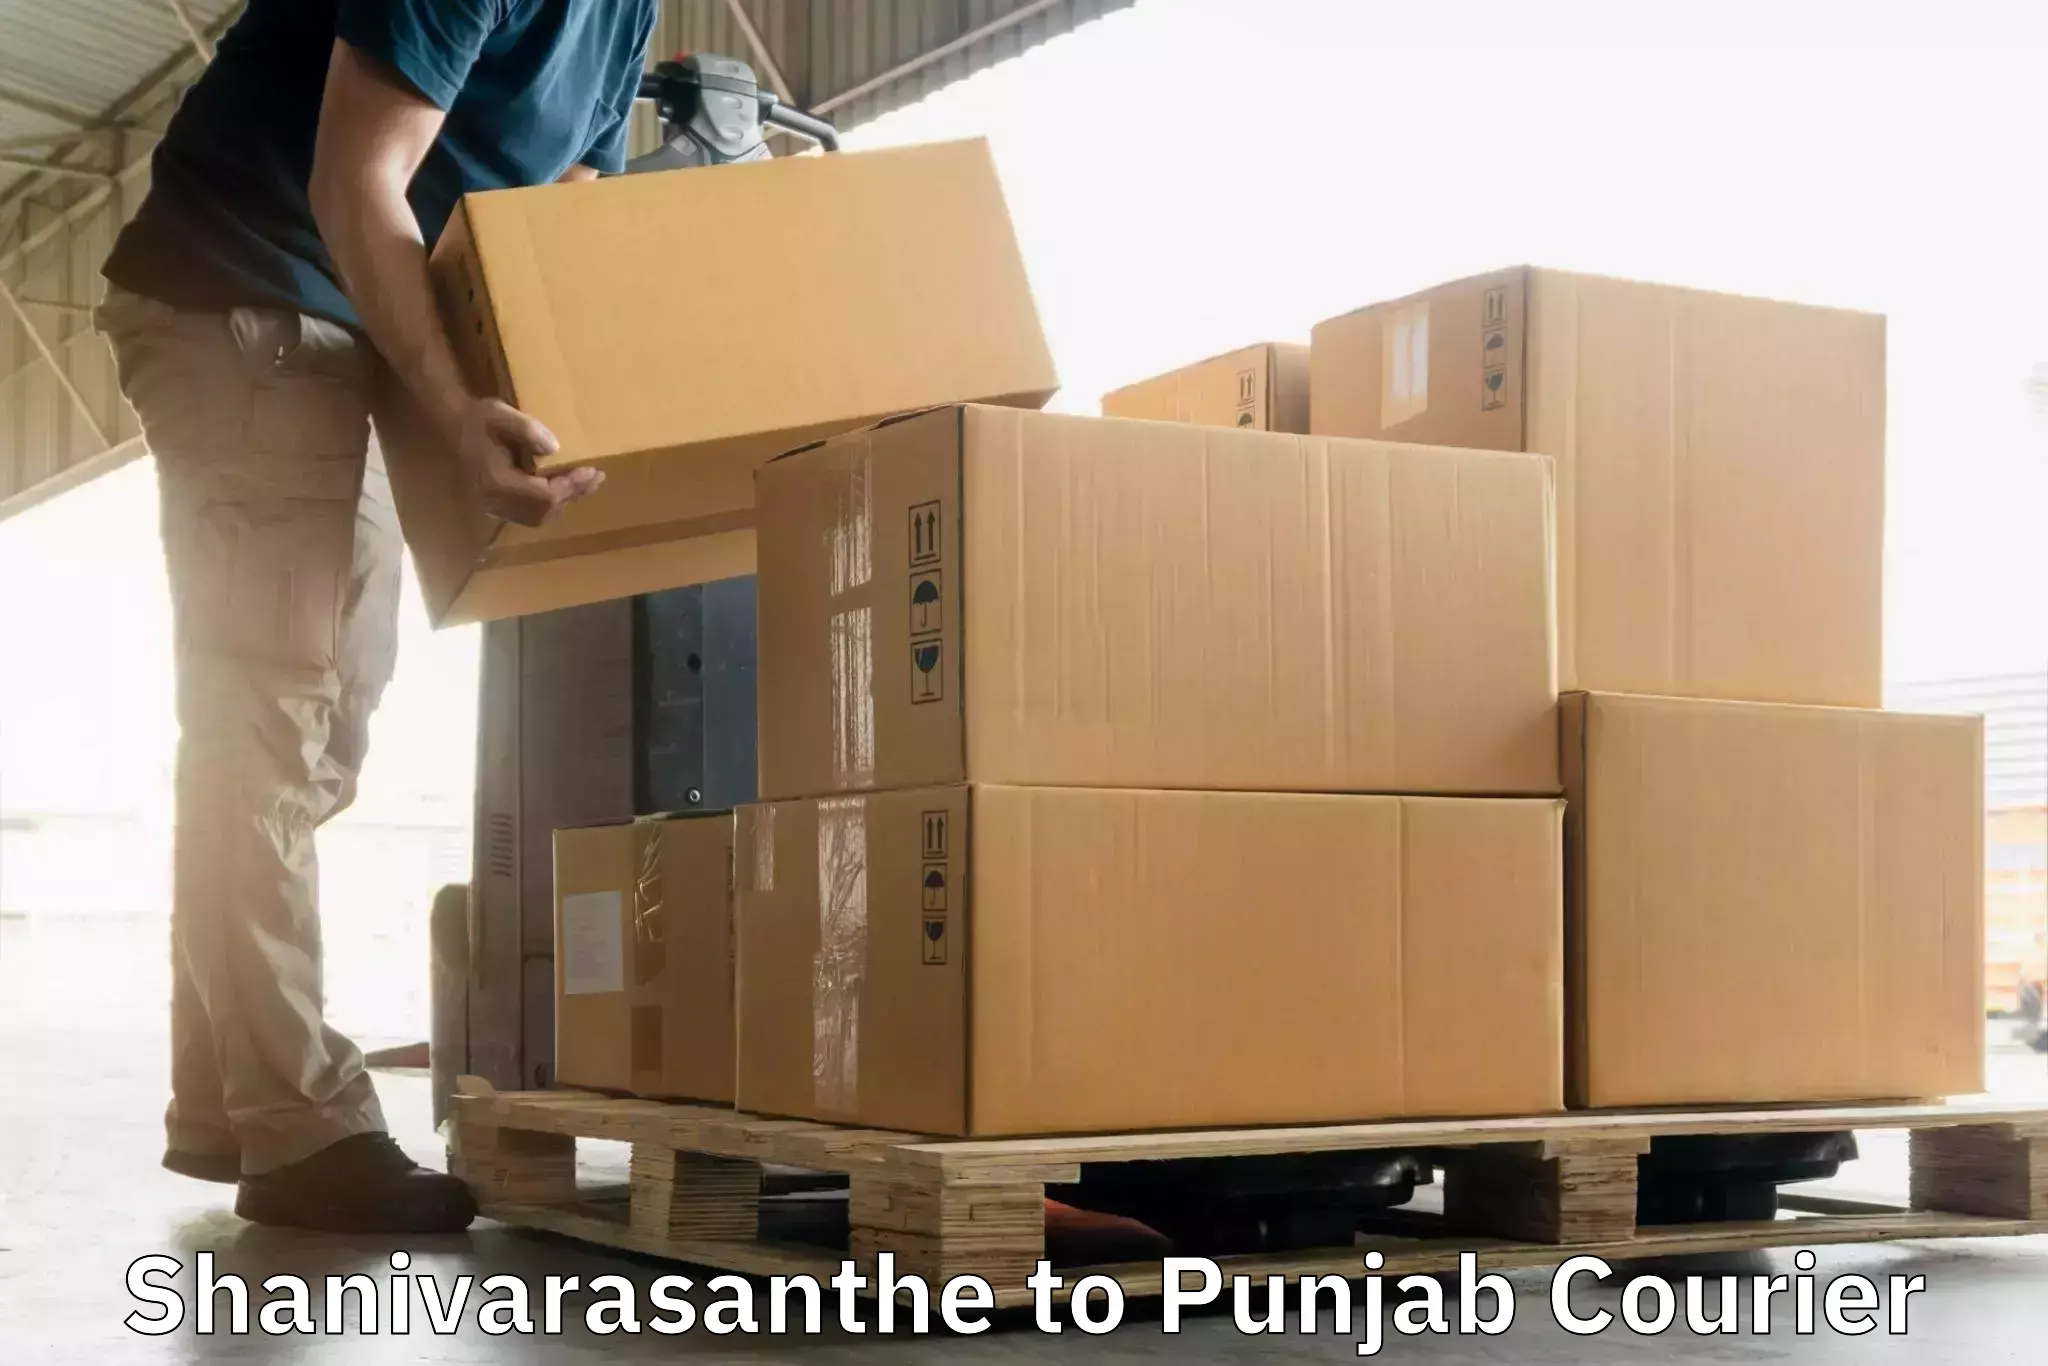 Speedy delivery service Shanivarasanthe to Ludhiana